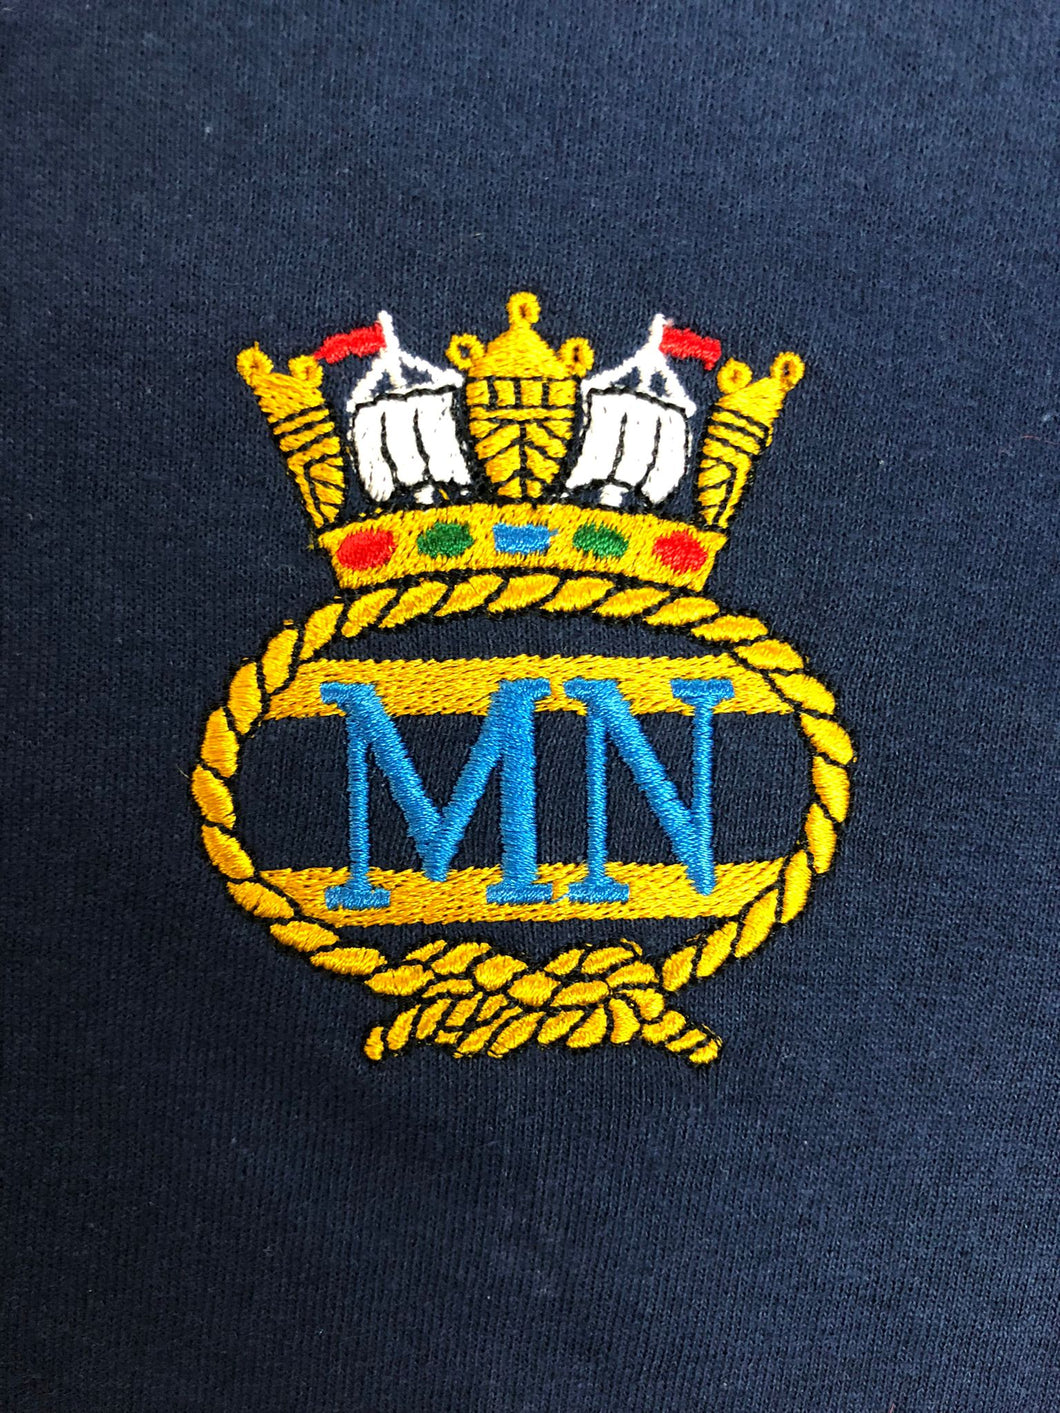 British Merchant Navy - Embroidered - Choose your Garment